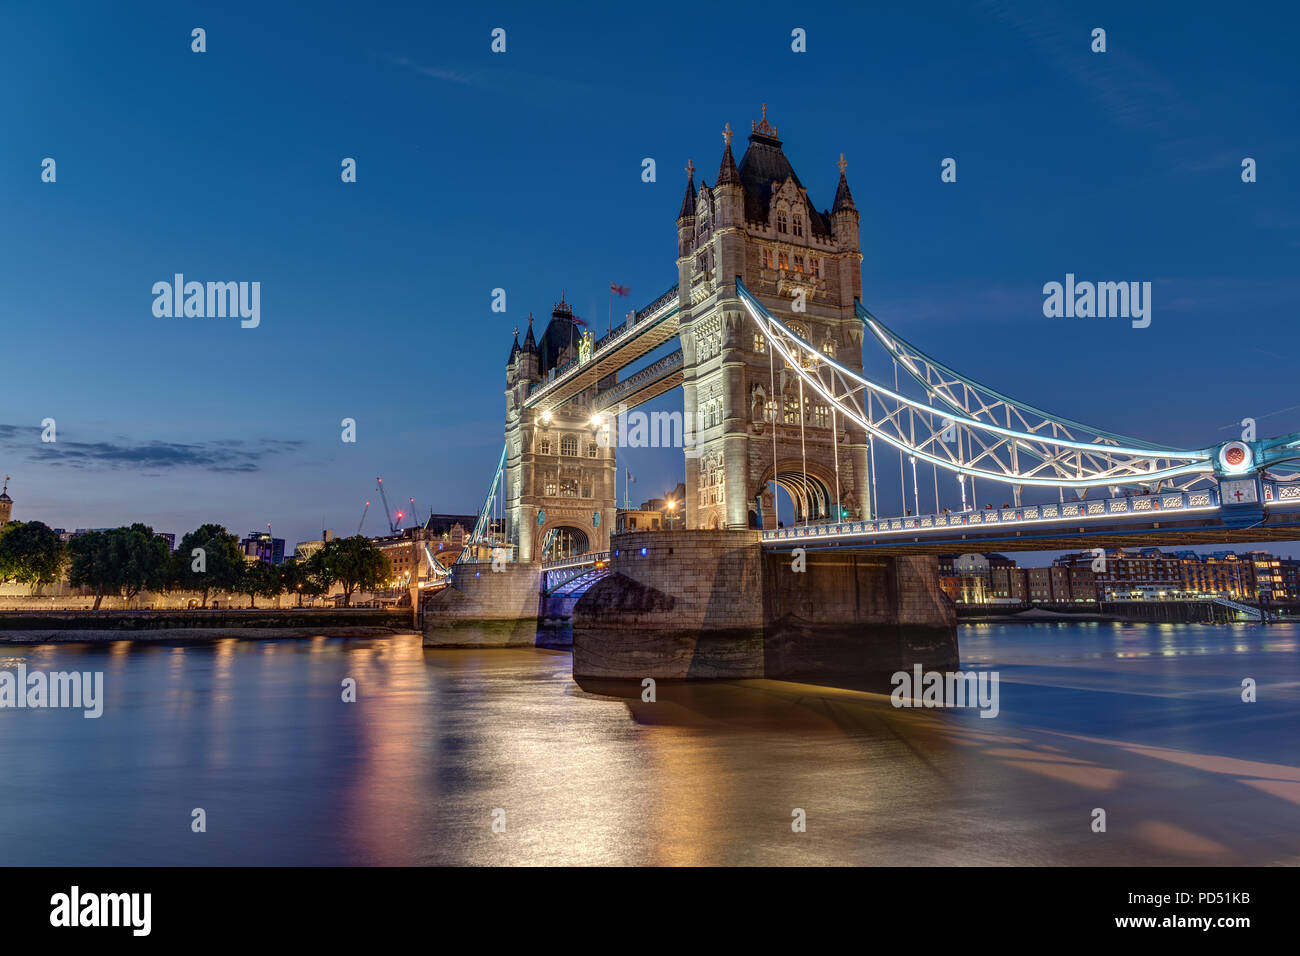 The illuminated Tower Bridge in London after sunset Stock Photo